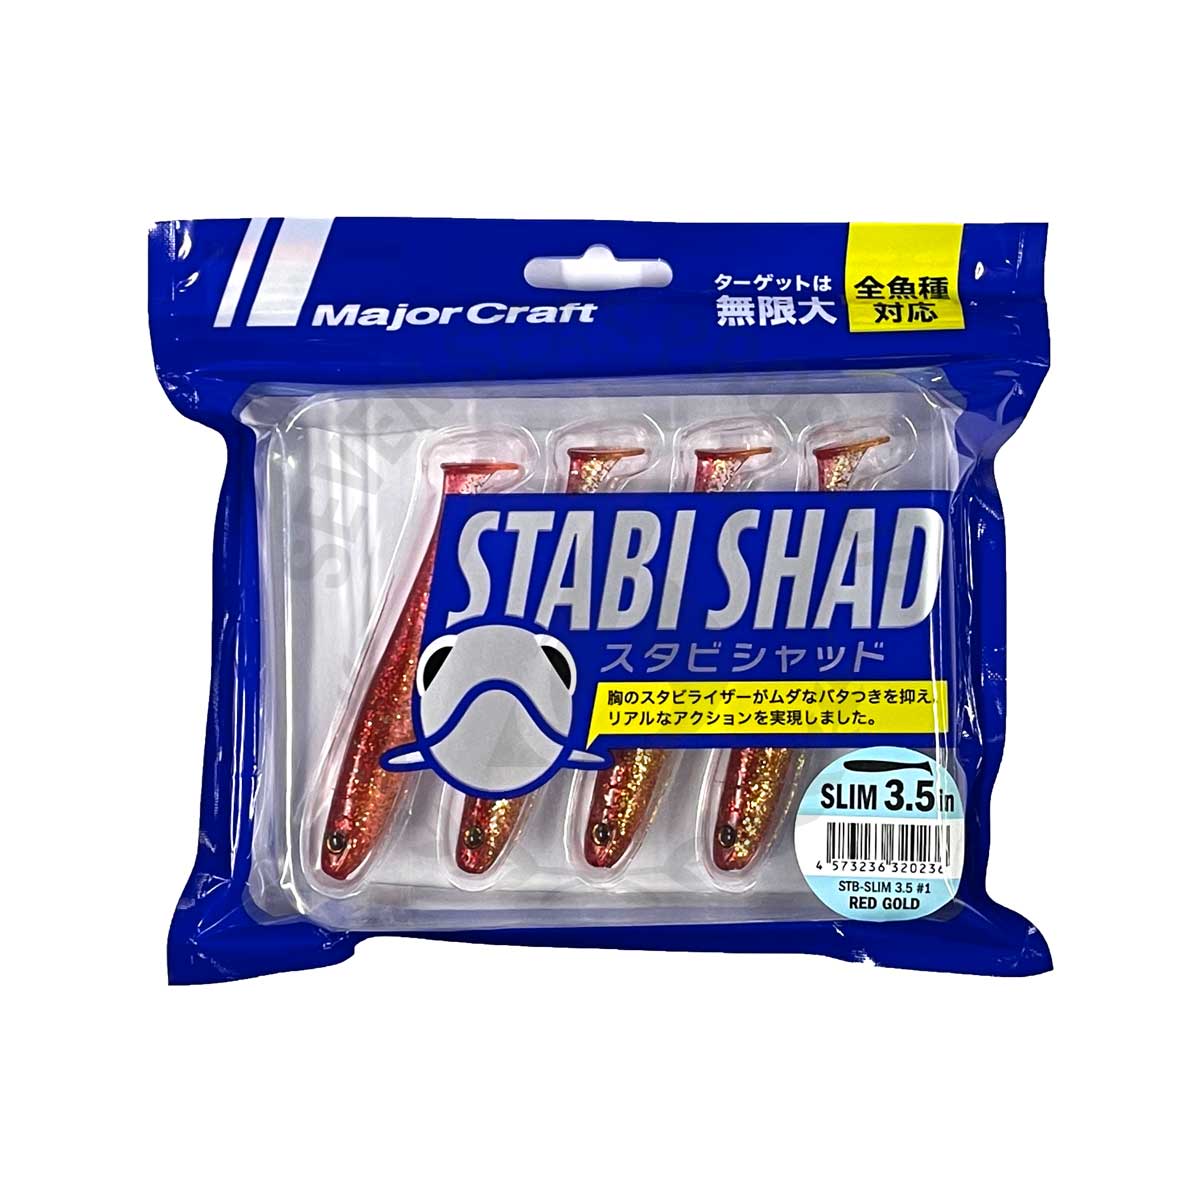 Major Craft Stabi Shad STB-SLIM 3.5 #1-Red Gold*เหยื่อปลายาง - 7 SEAS  PROSHOP (THAILAND)